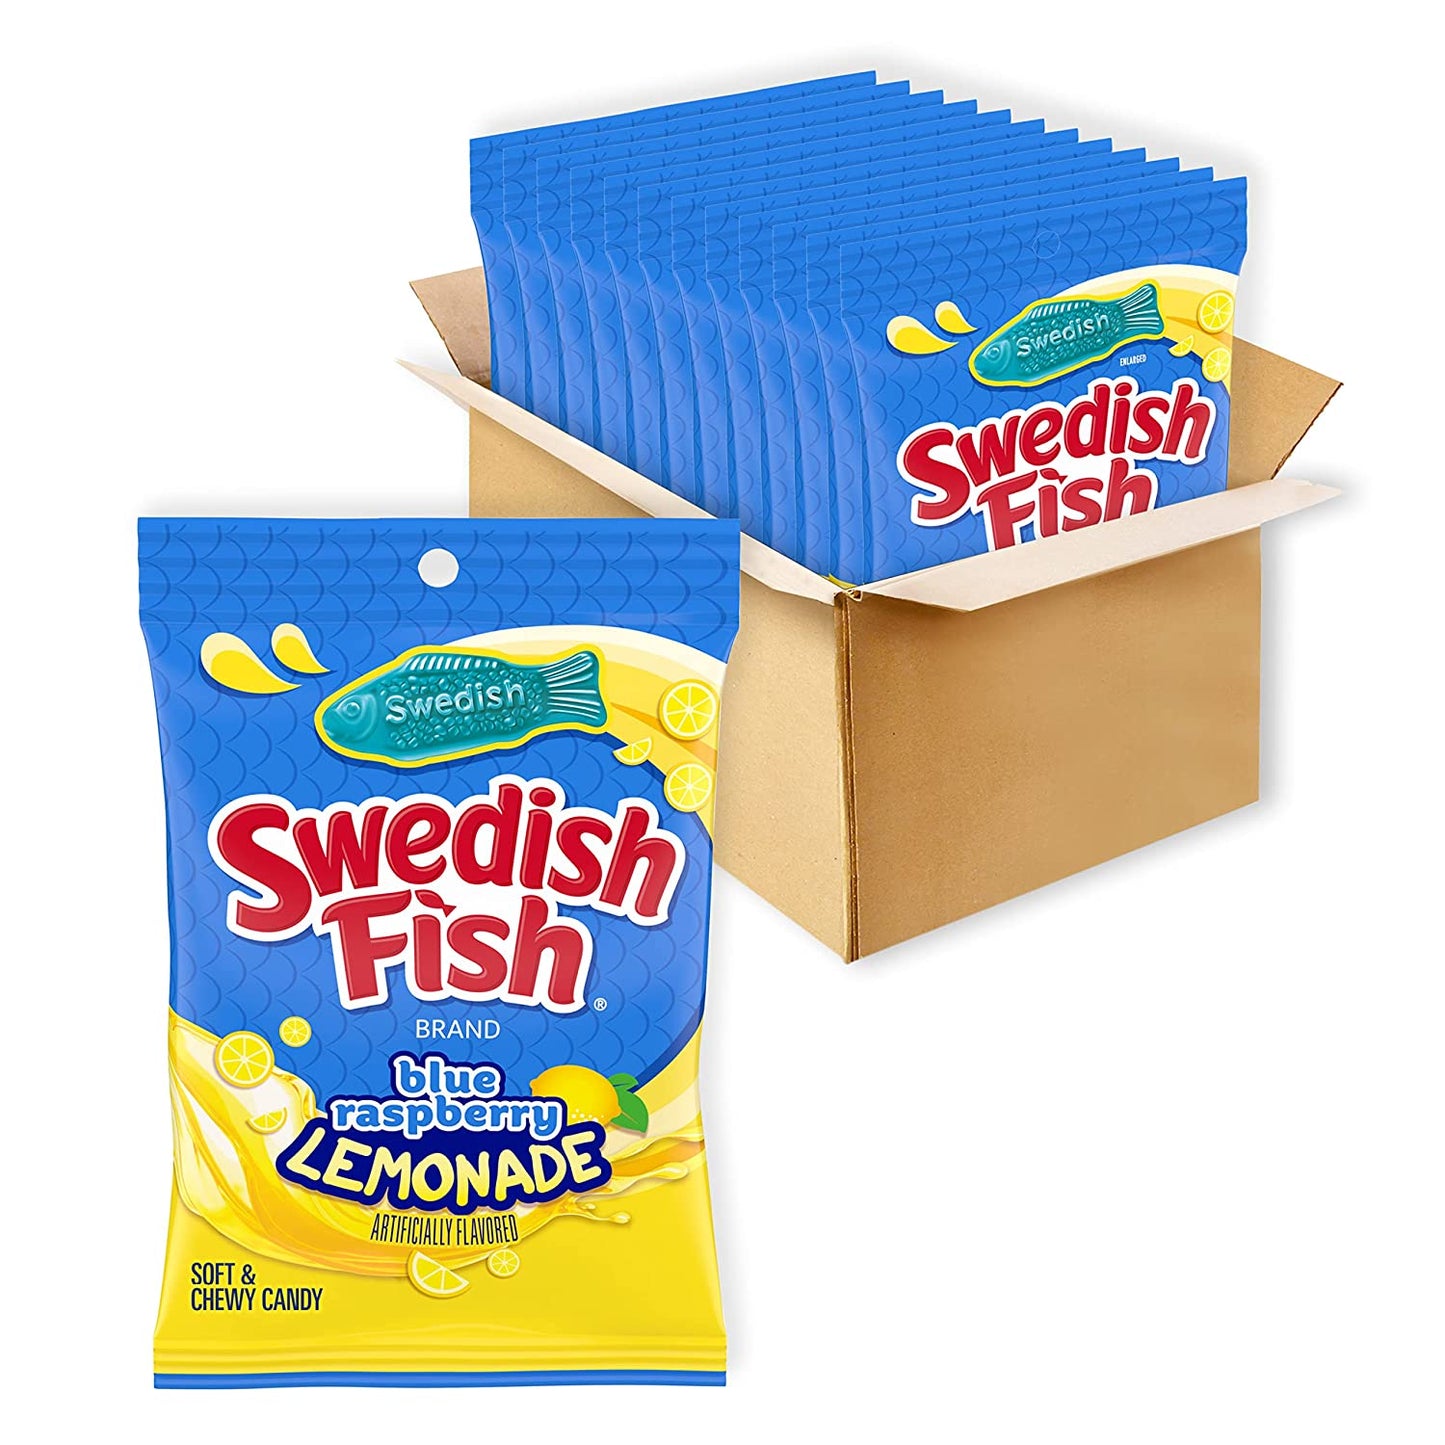 SWEDISH FISH Blue Raspberry Lemonade Soft & Chewy Candy